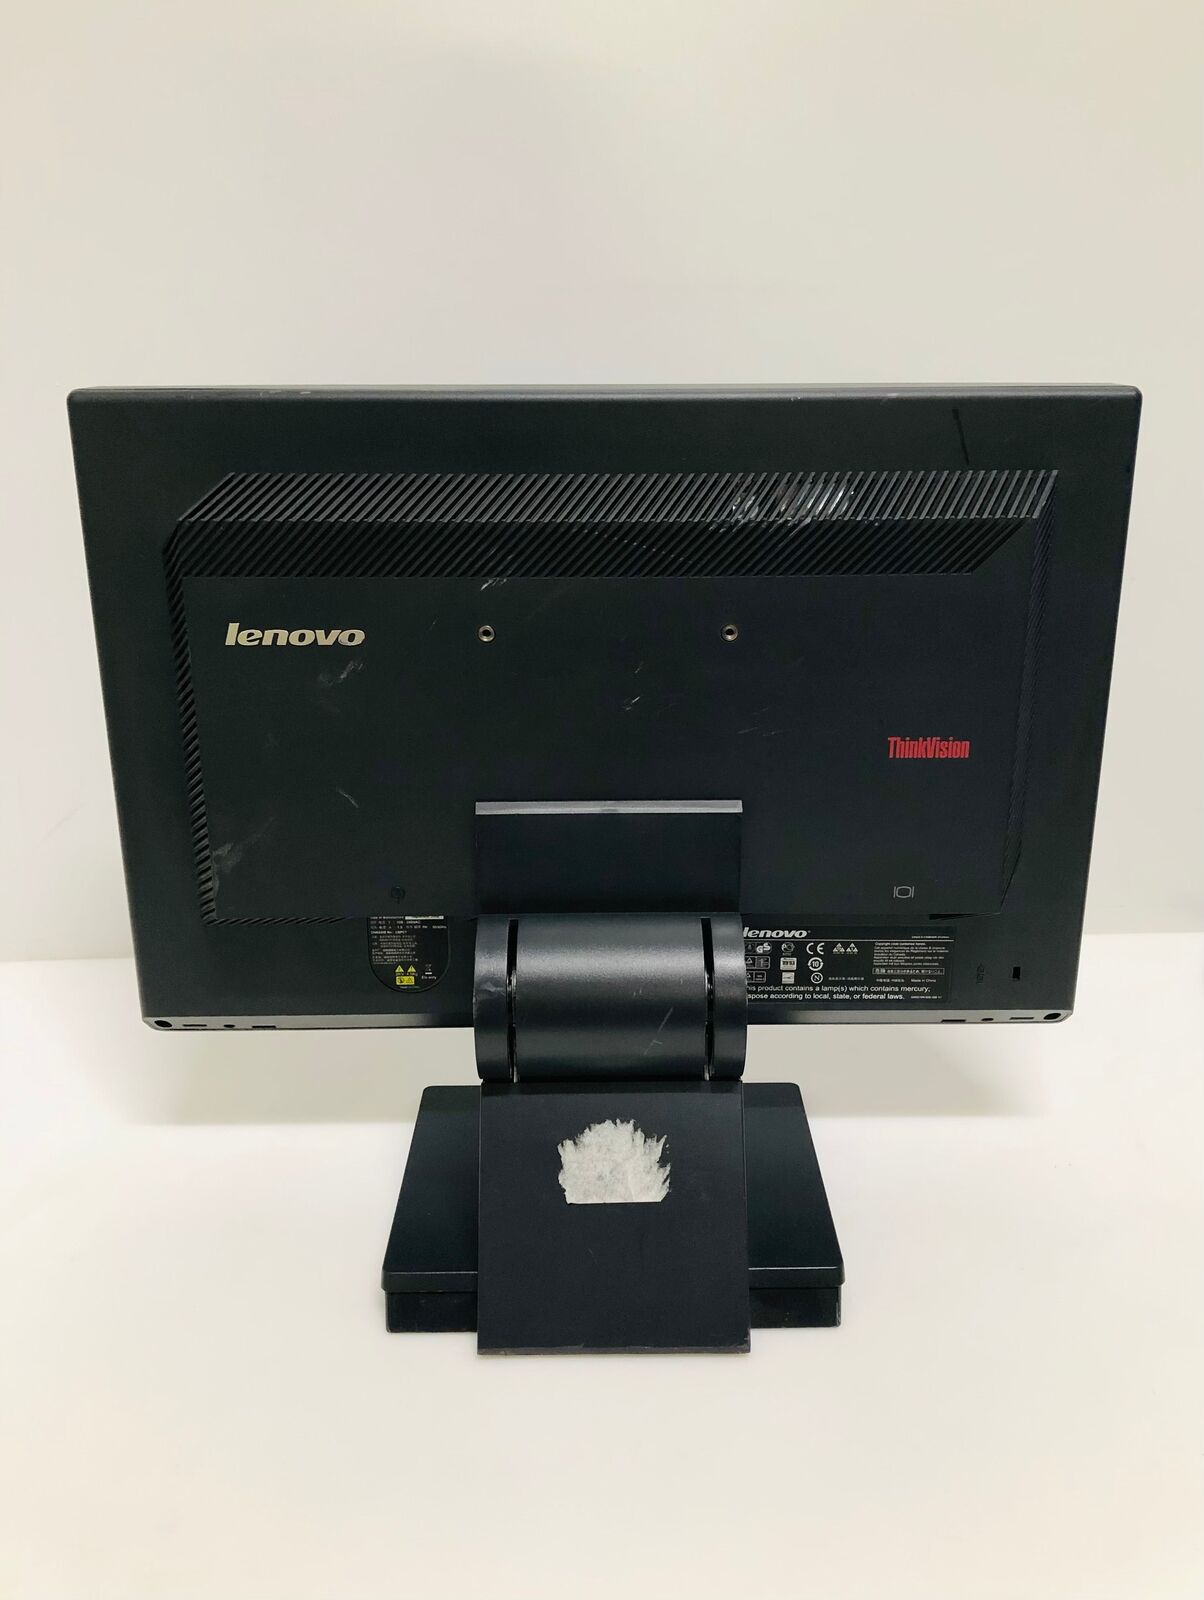 Lenovo L1940wA monitor